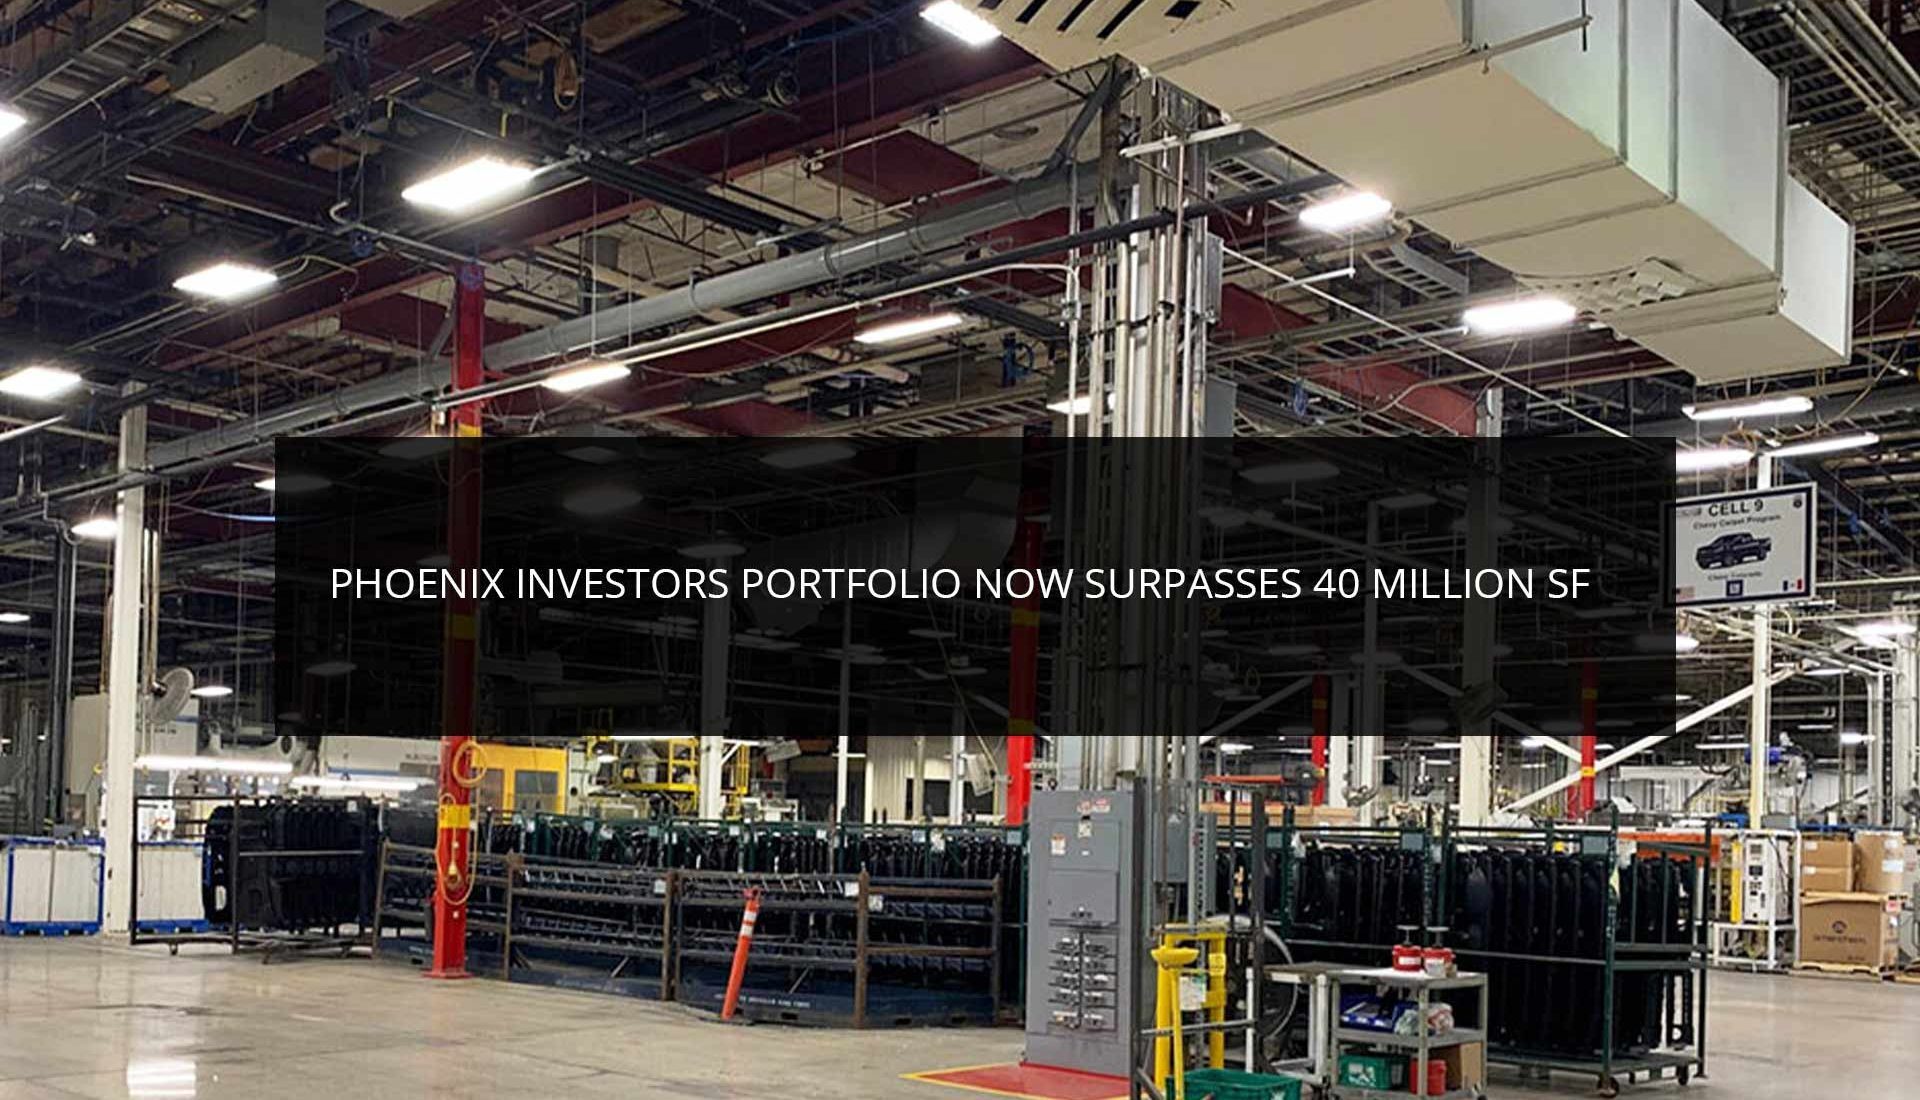 Phoenix Investors Portfolio Now Surpasses 40 Million SF